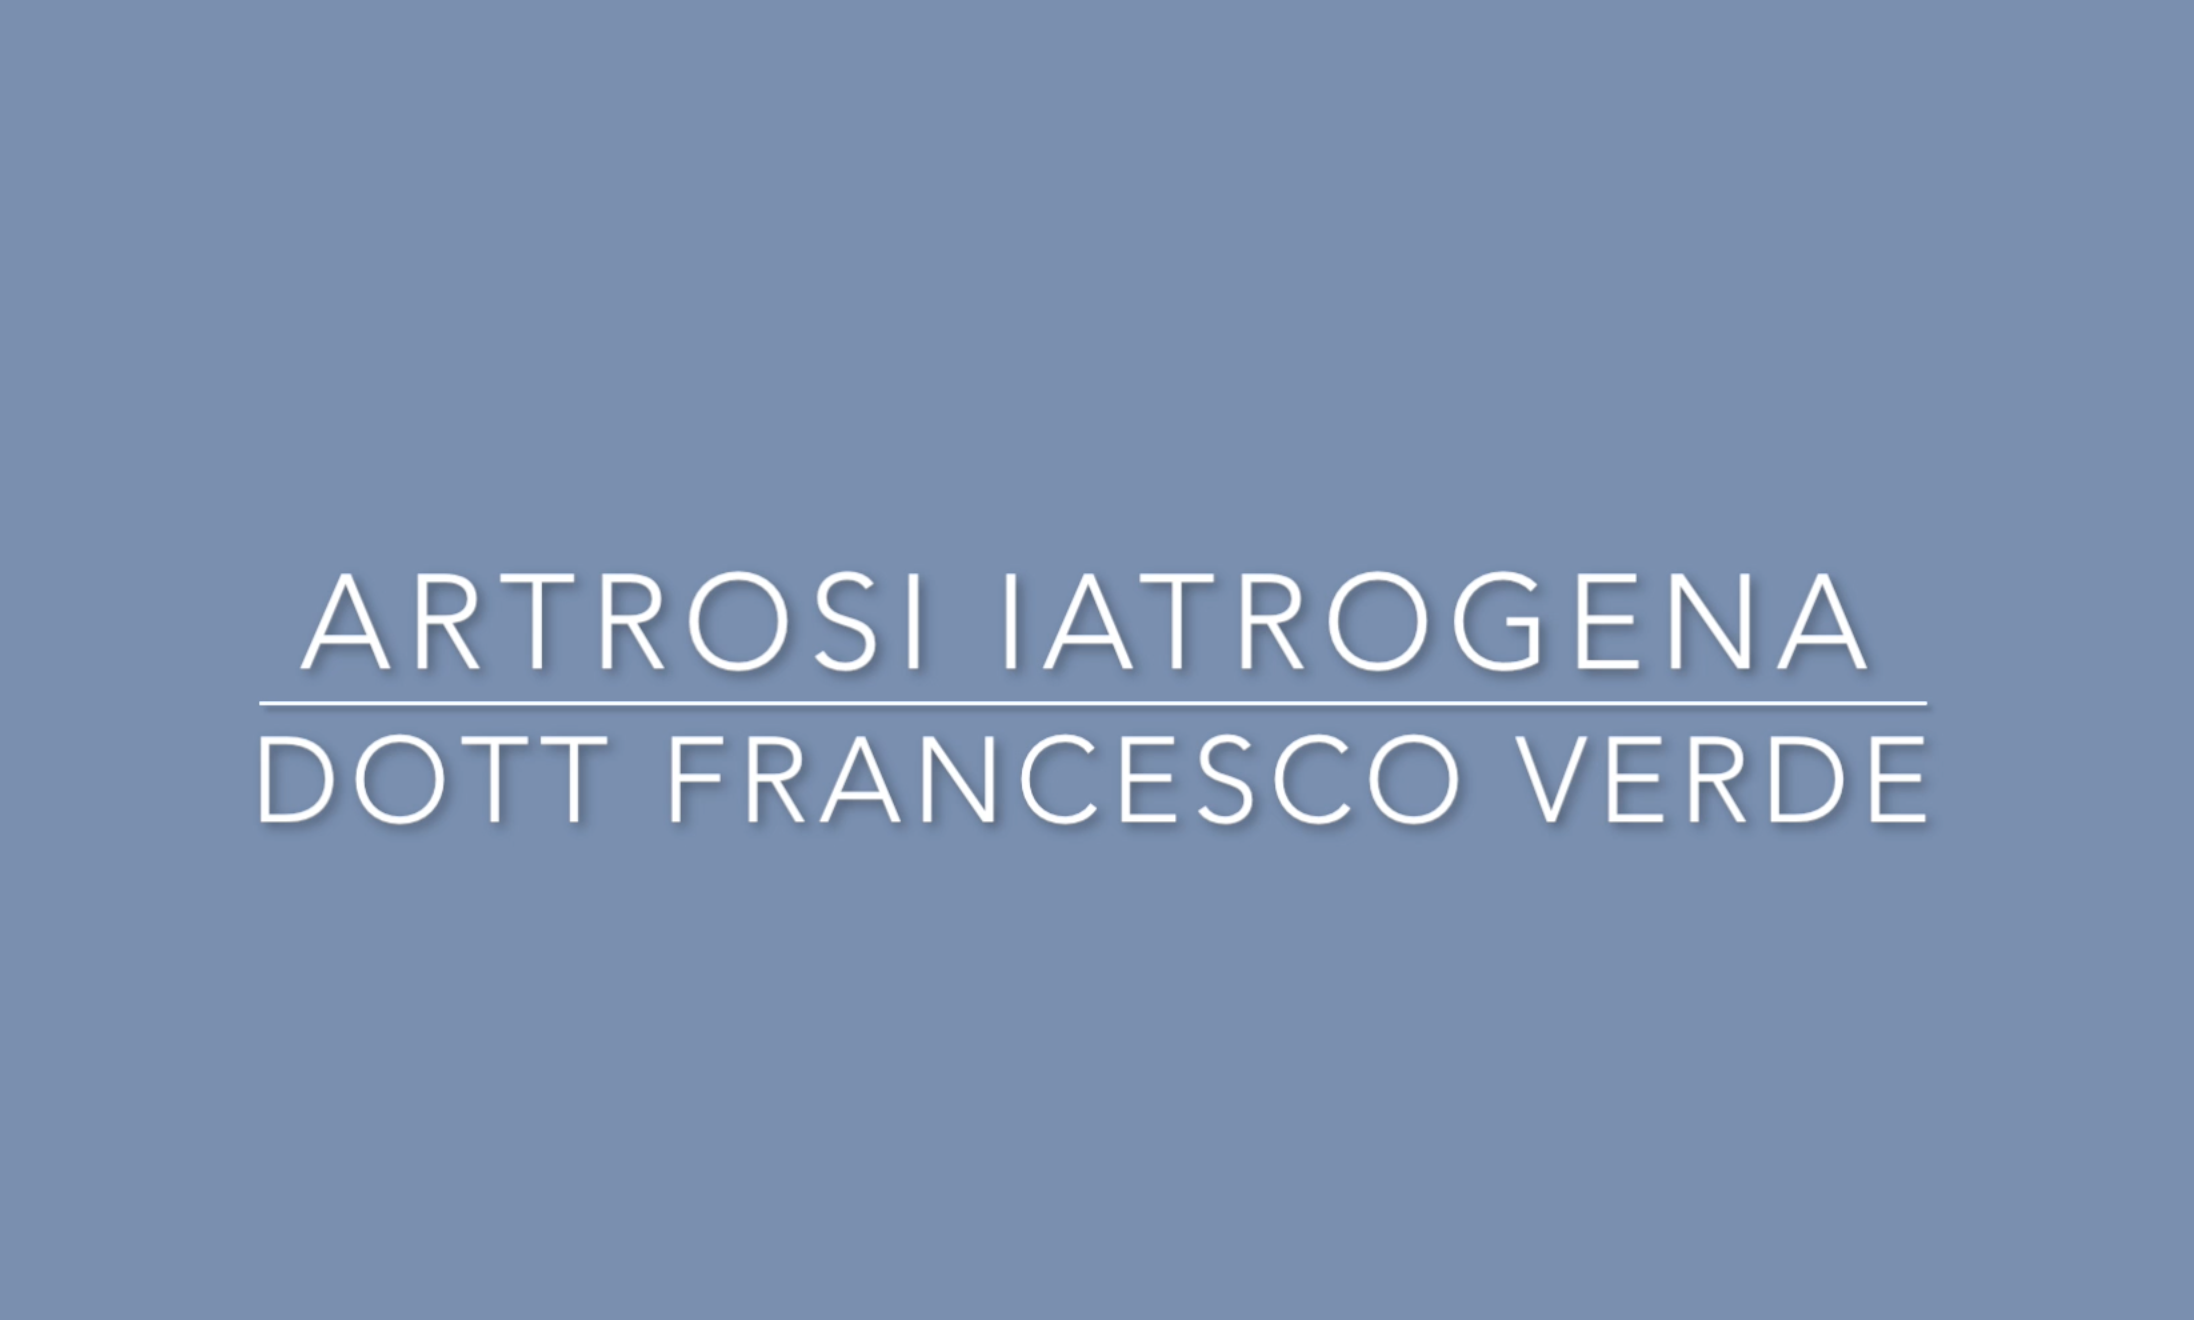 artrosi-iatrogena-francesco-verde